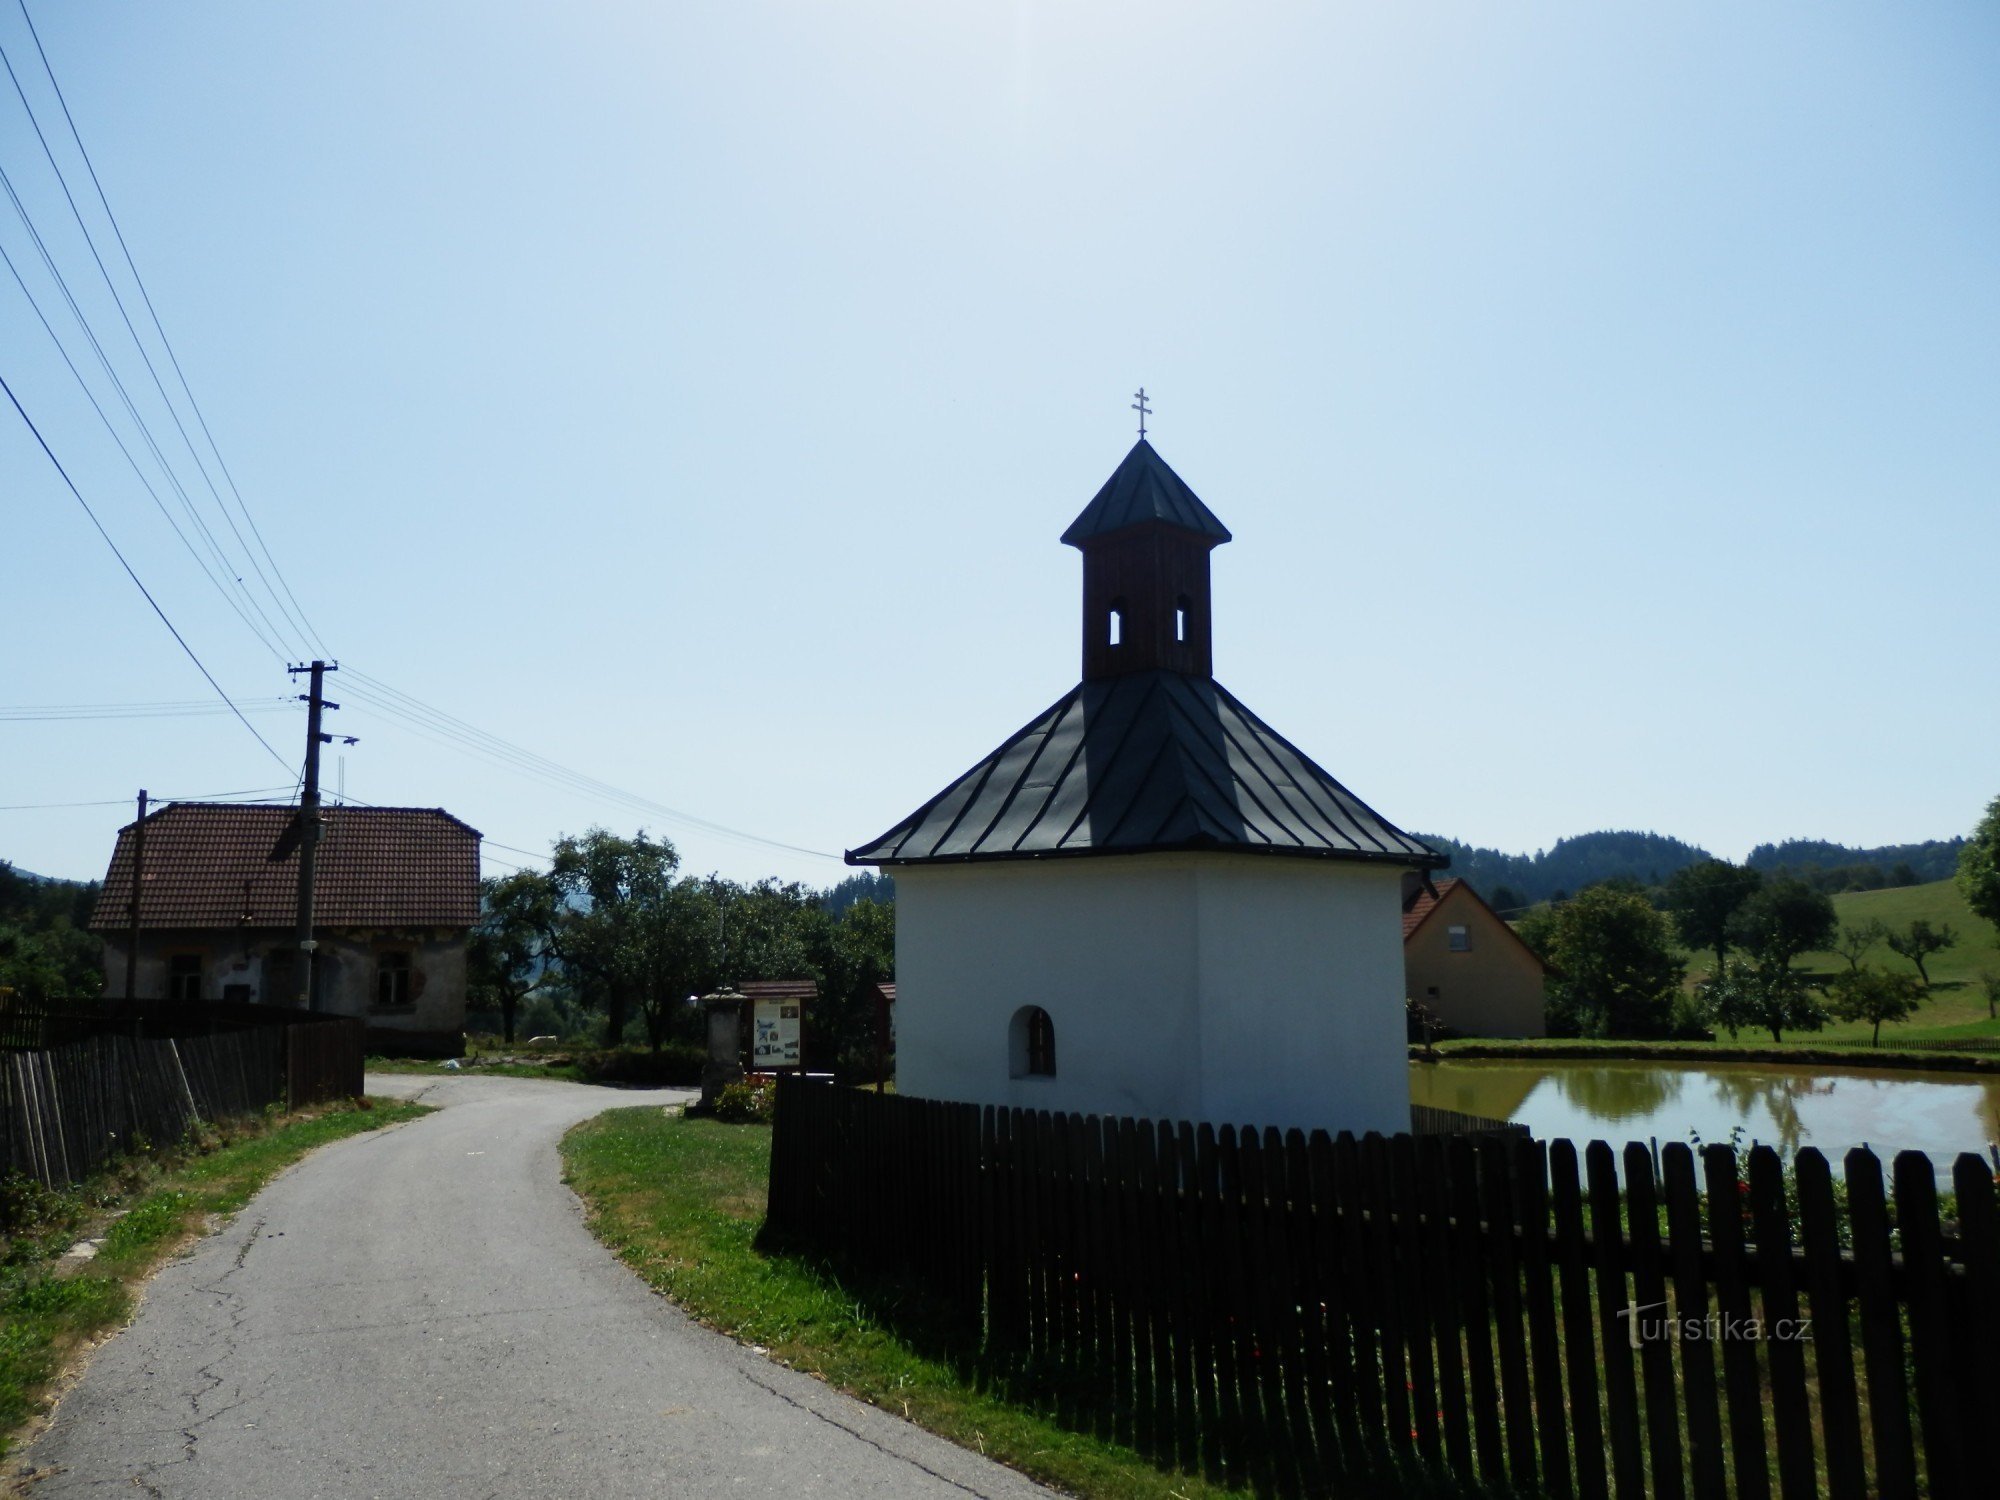 Bystřice nad Pernštejnem - local part of Kozlov